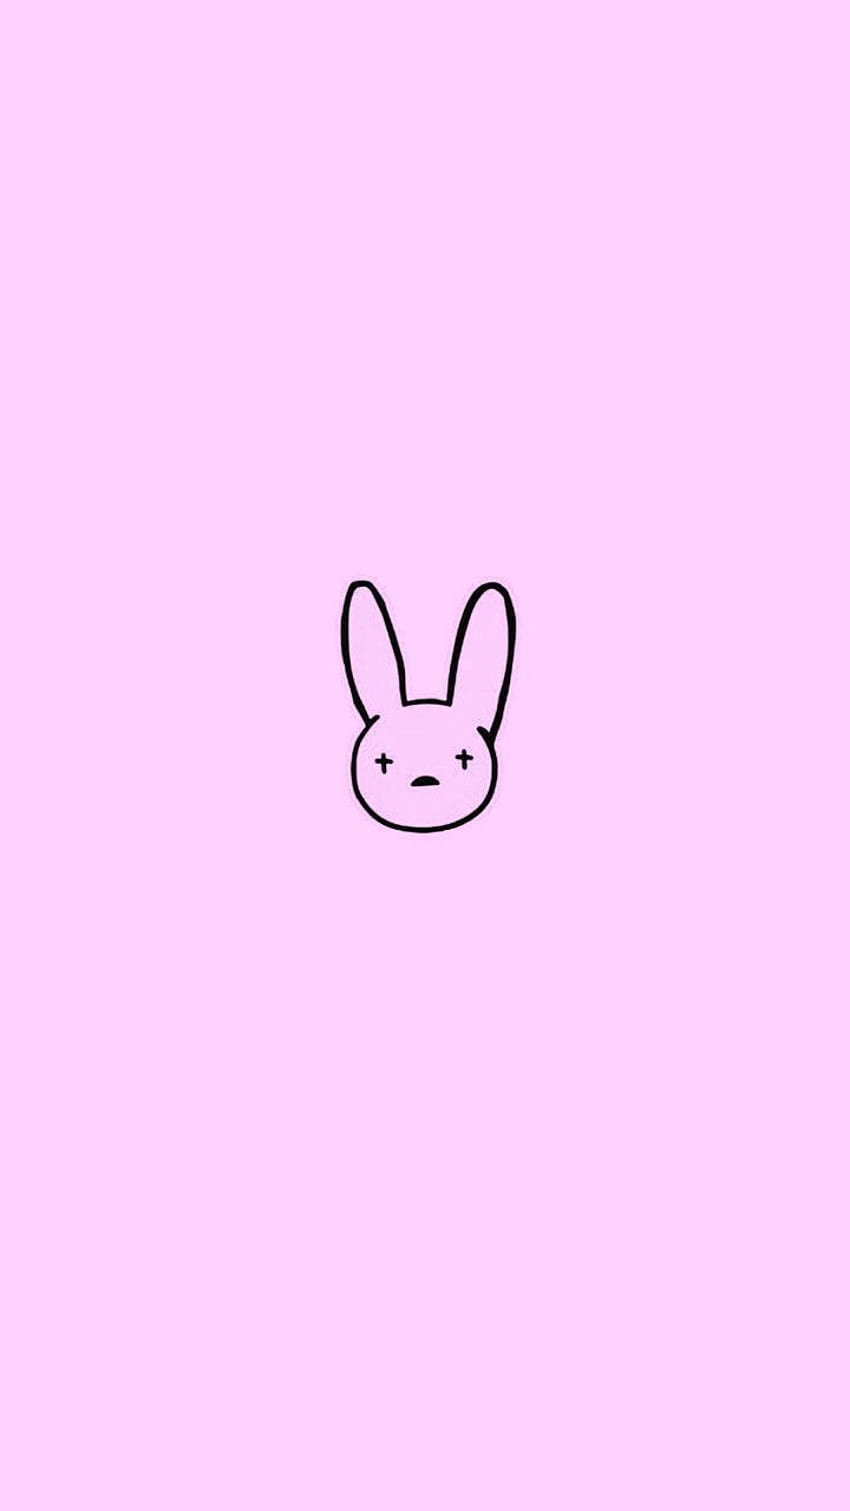 Bad Bunny Wallpapers  Top 35 Best Bad Bunny Backgrounds Download